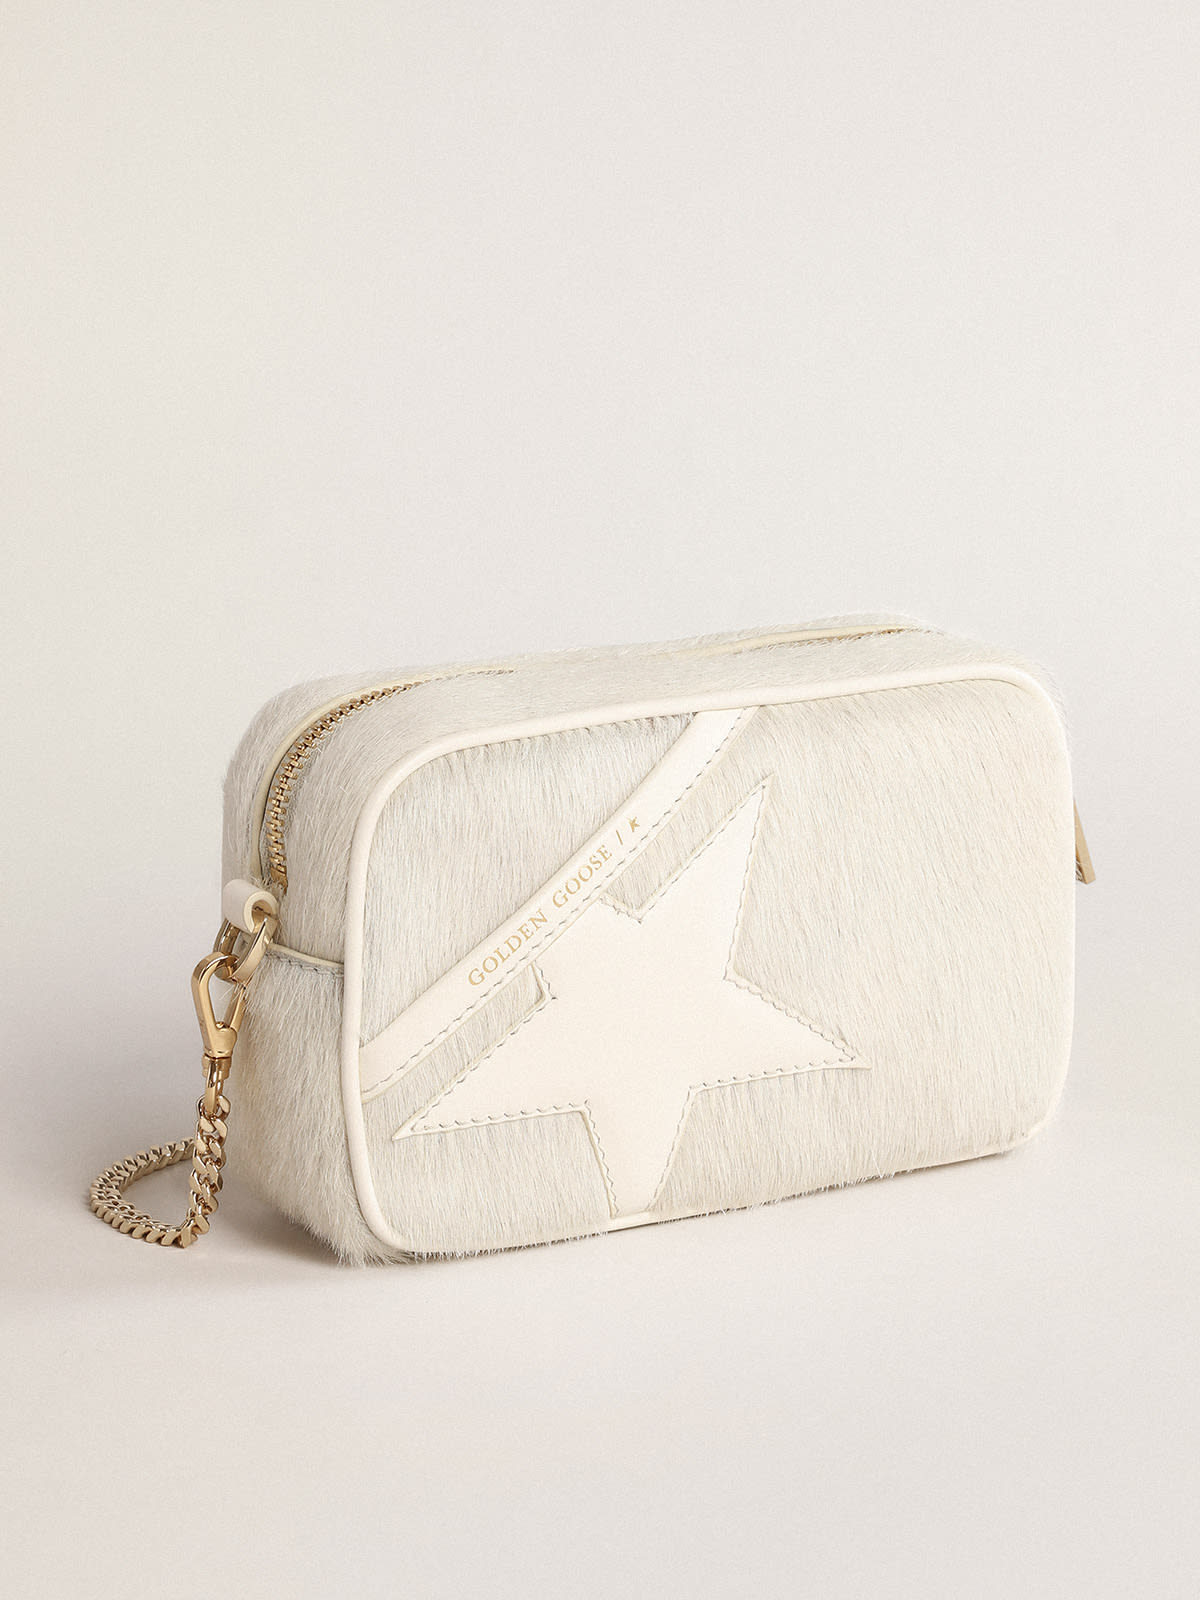 Golden Goose - Mini Star Bag in pelle color bianco heritage con stella ton sur ton in 